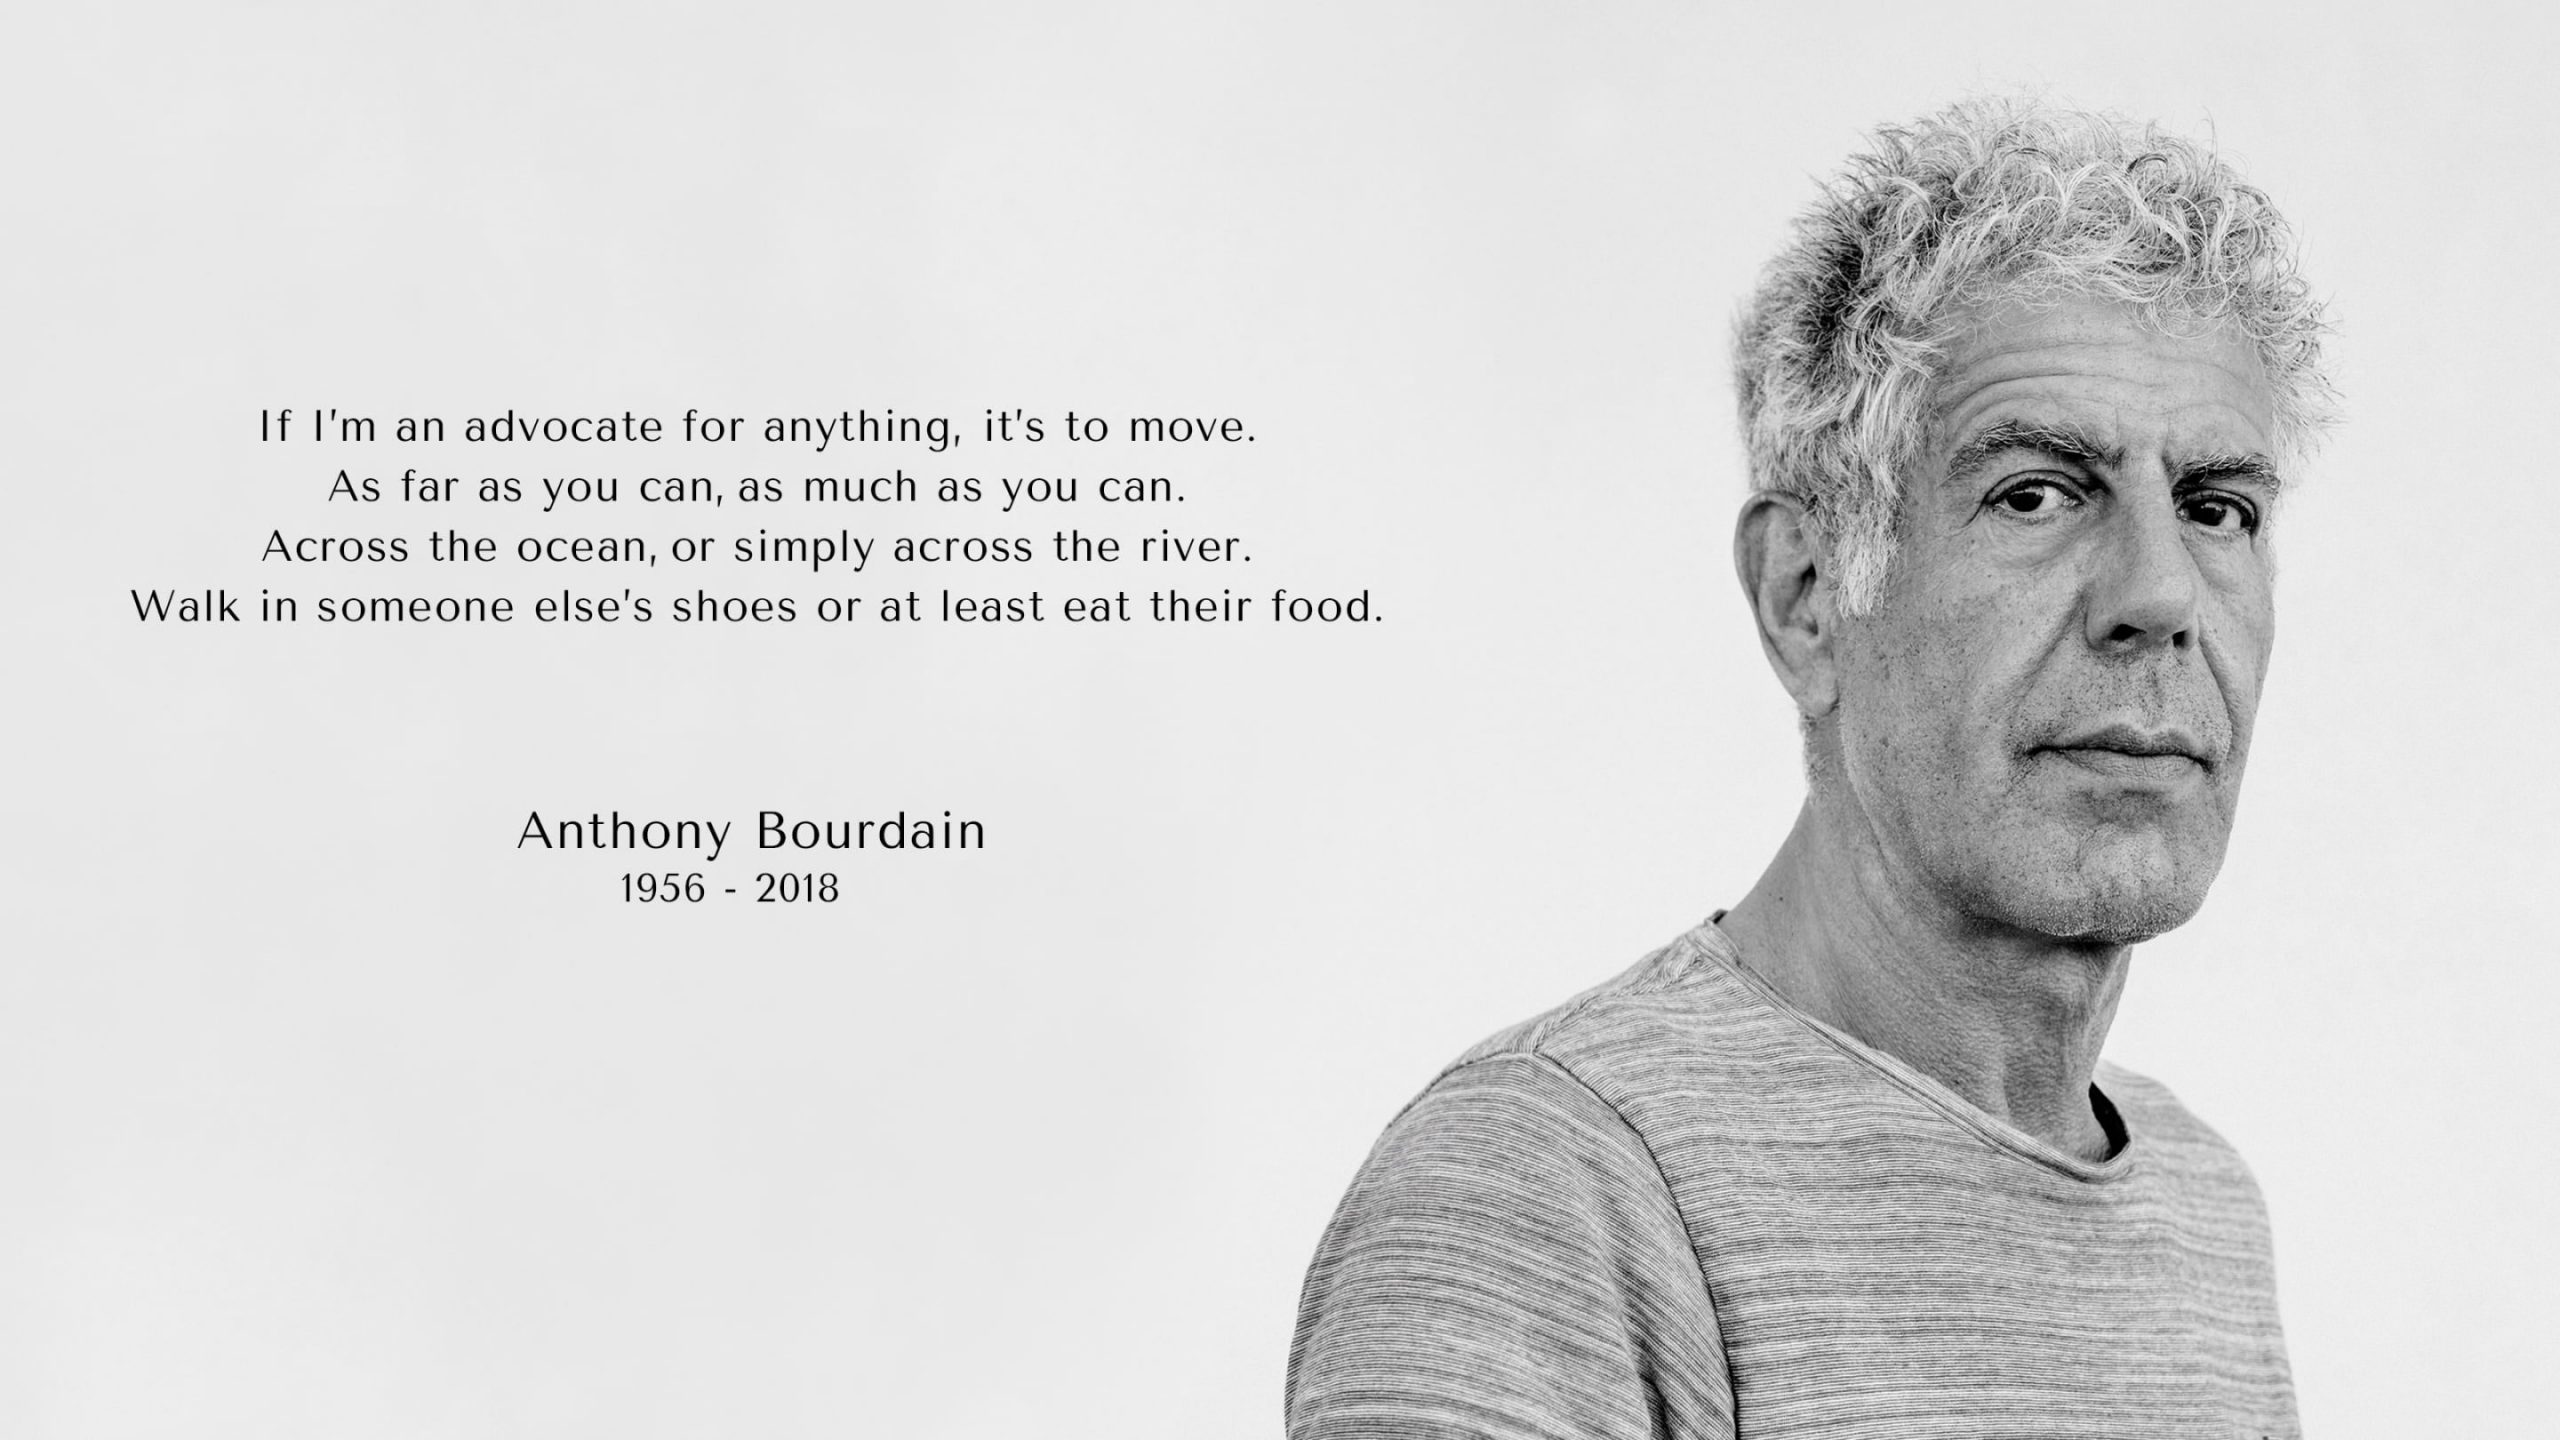 Anthony Bourdain quote wallpaper, celebrity, Chef, headshot, portrait